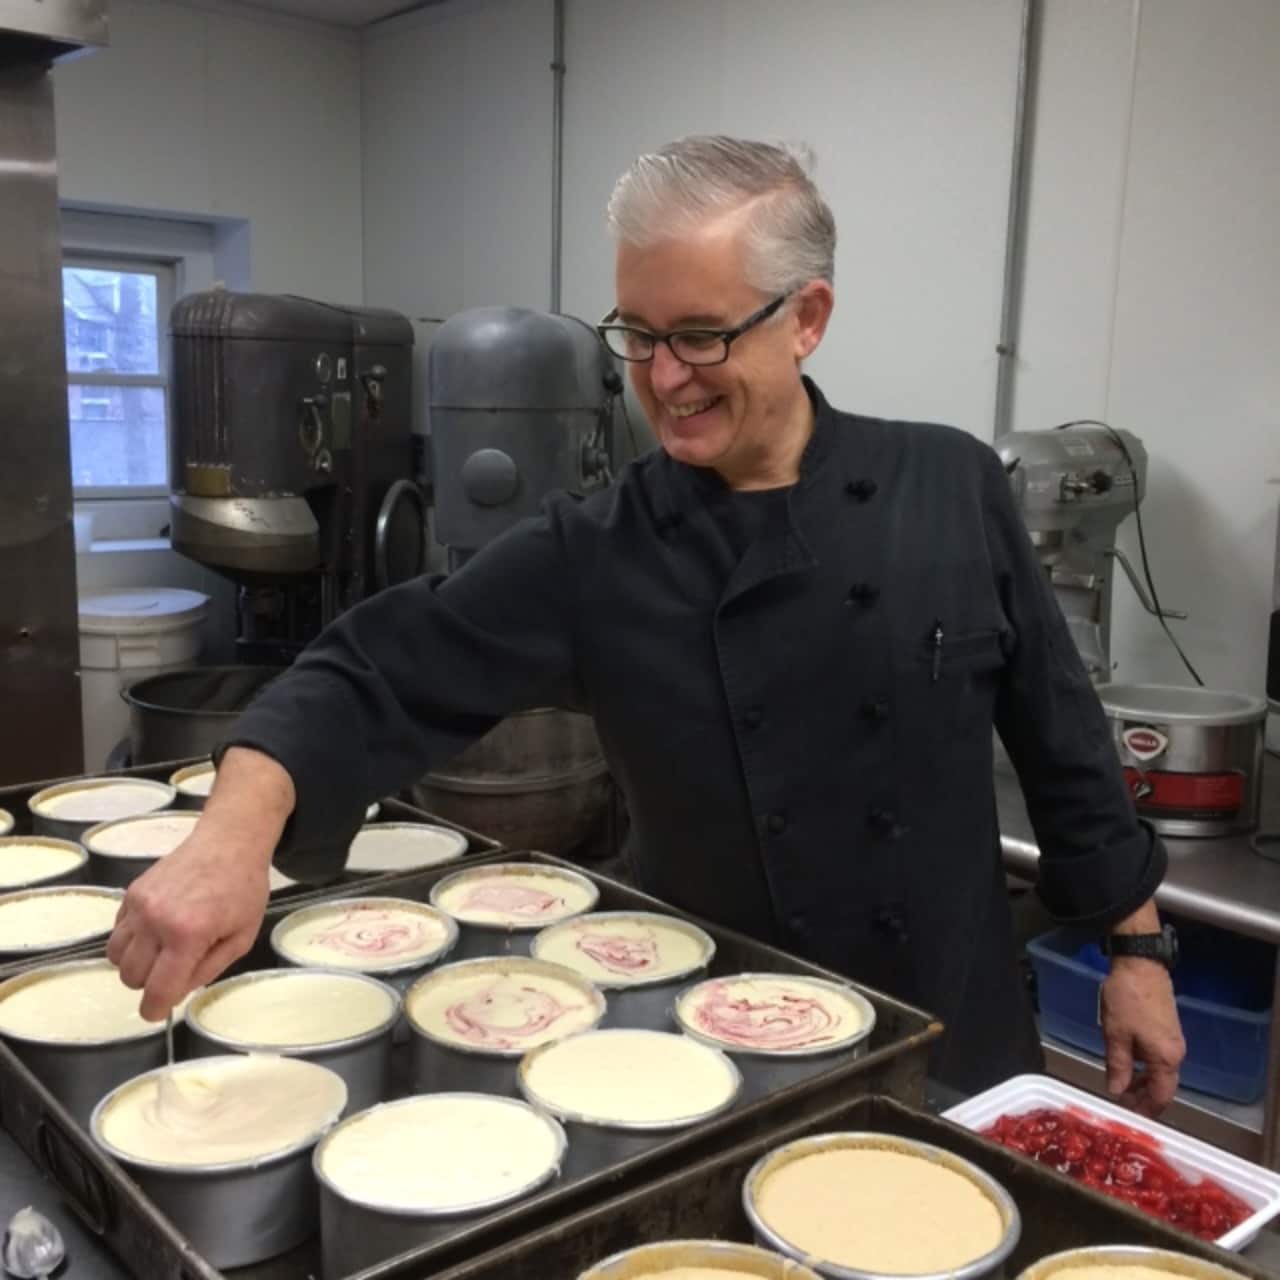 Brian Stockbridge prepares a tray of cheesecakes at Dee's Kitchen of Shelton.